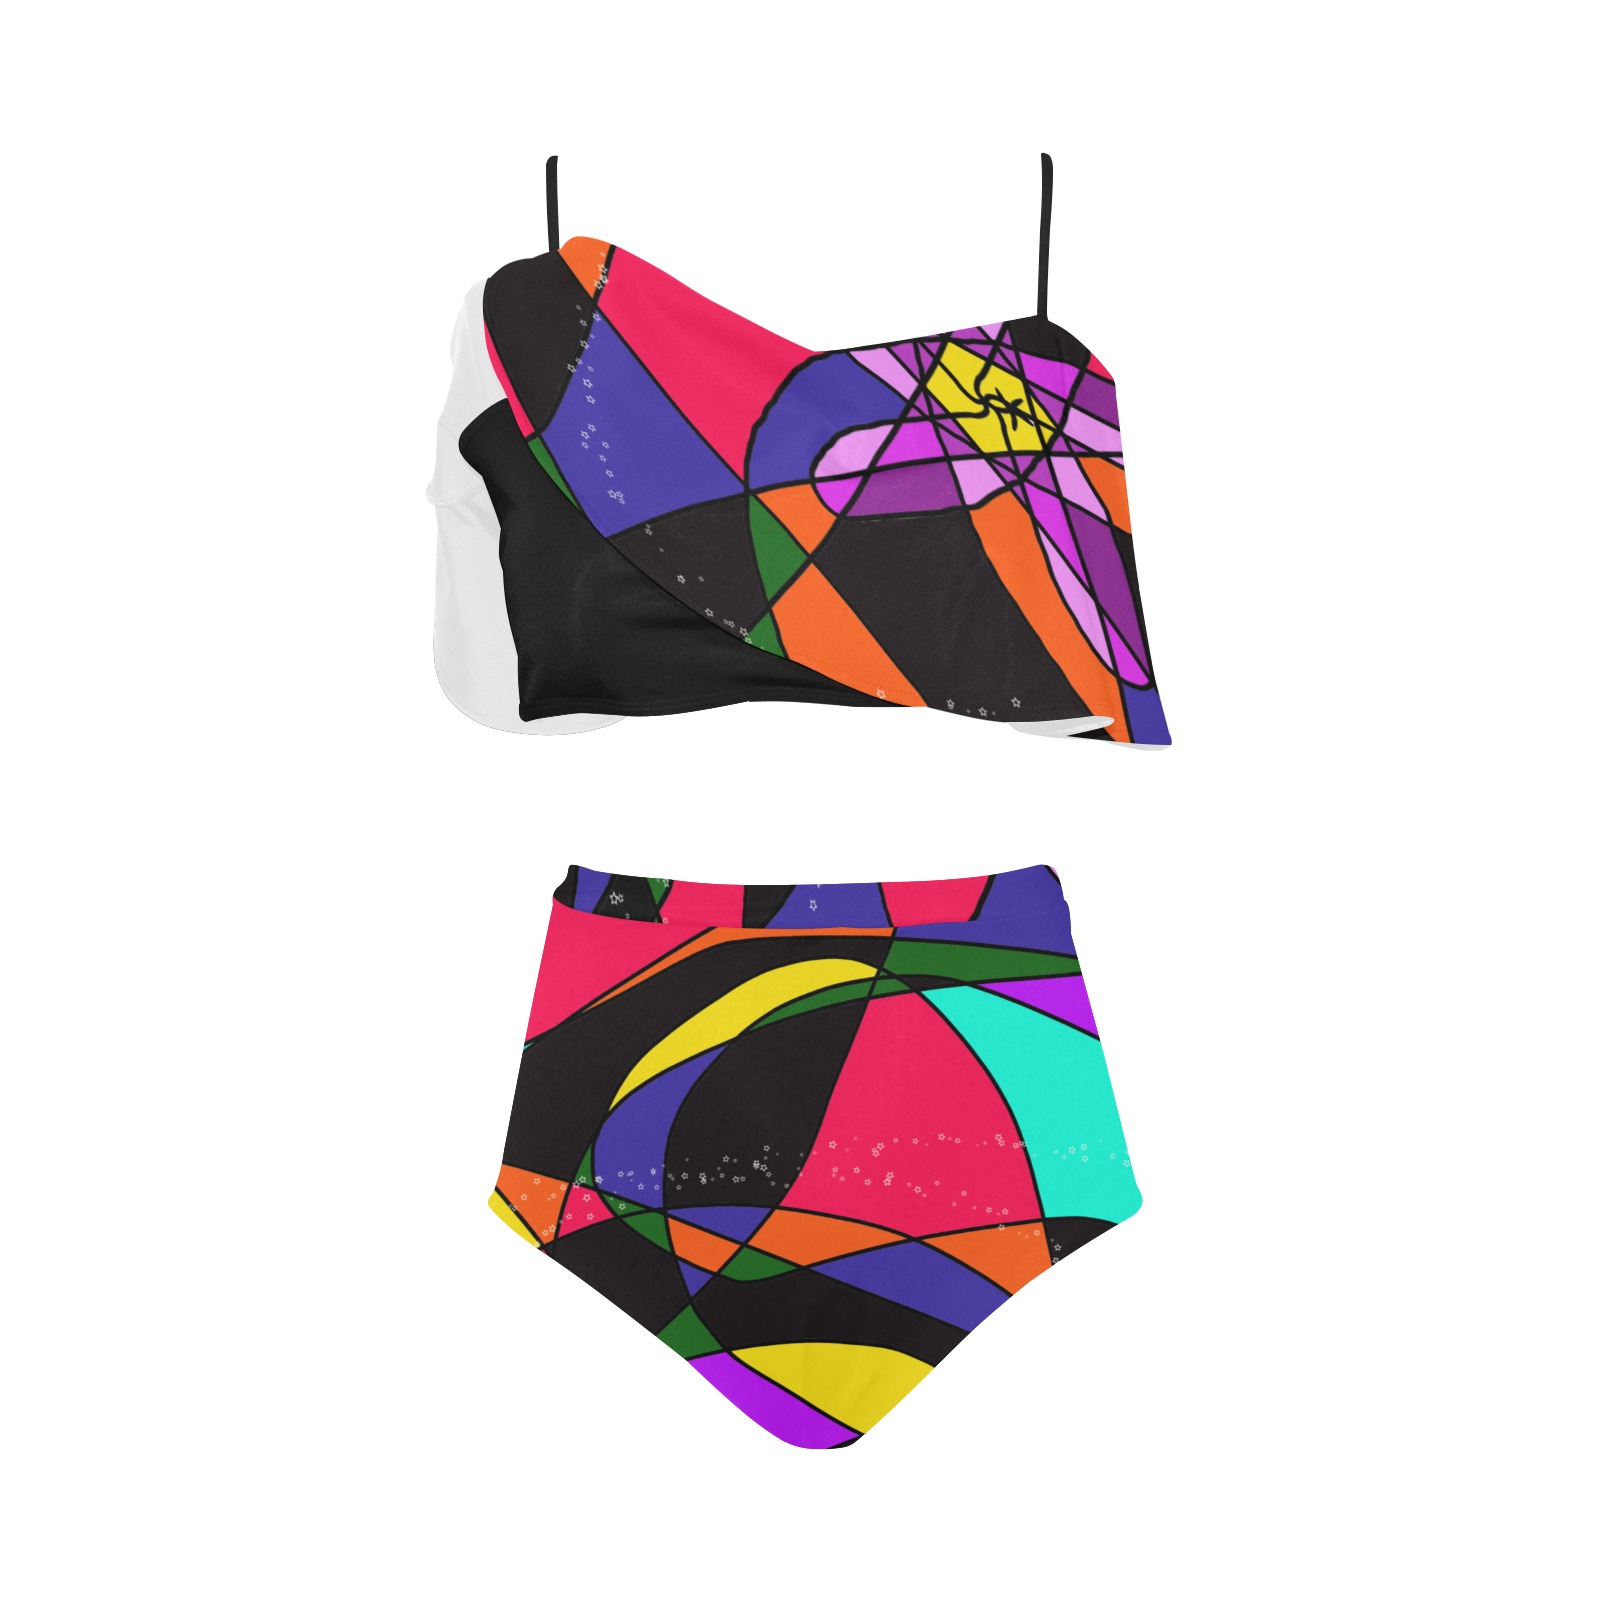 Abstract Design S 2020 High Waisted Ruffle Bikini Set (Model S13)